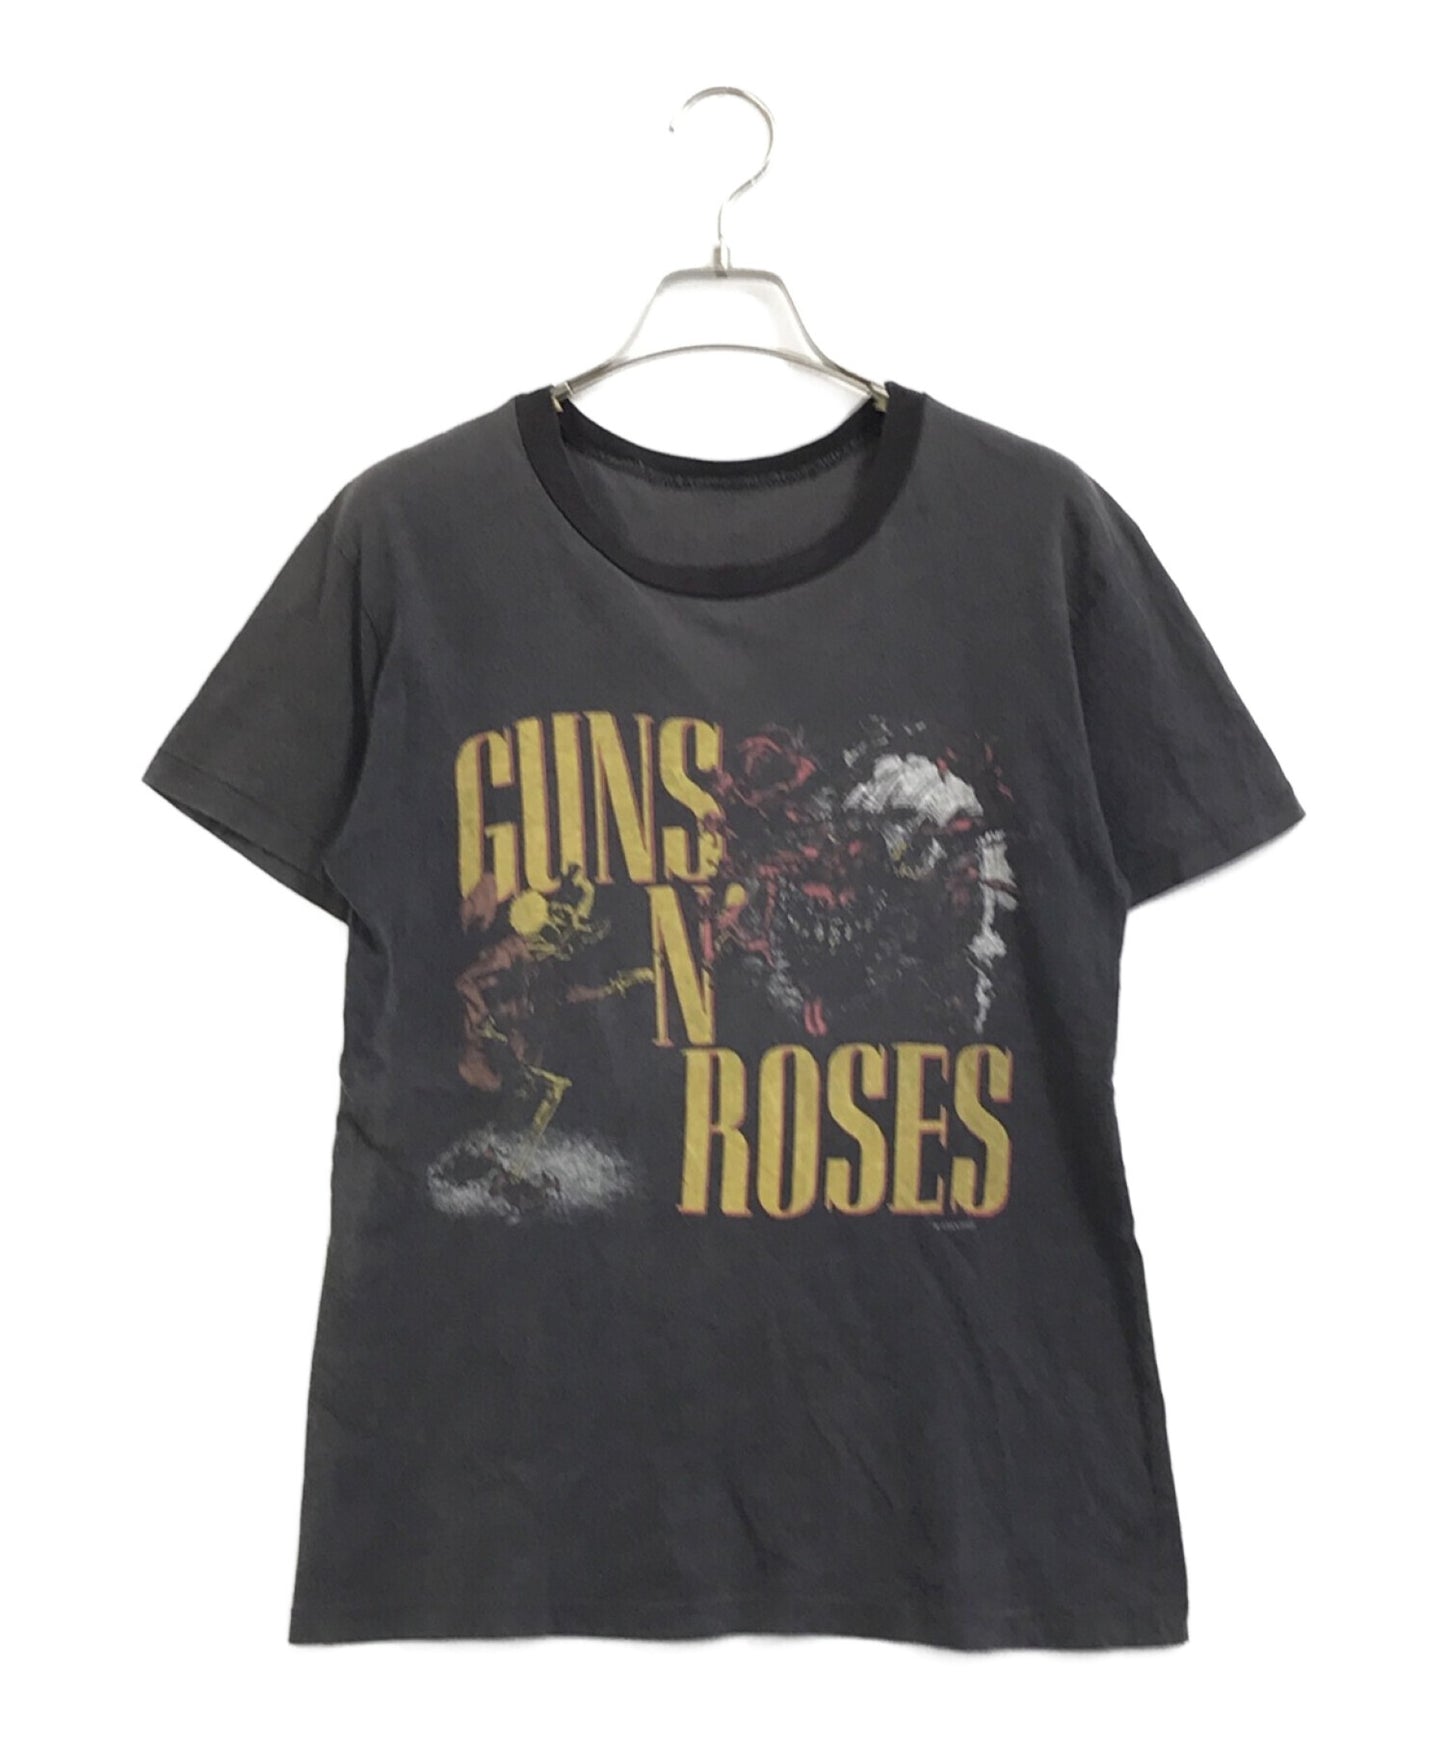 Guns N Roses Band T恤